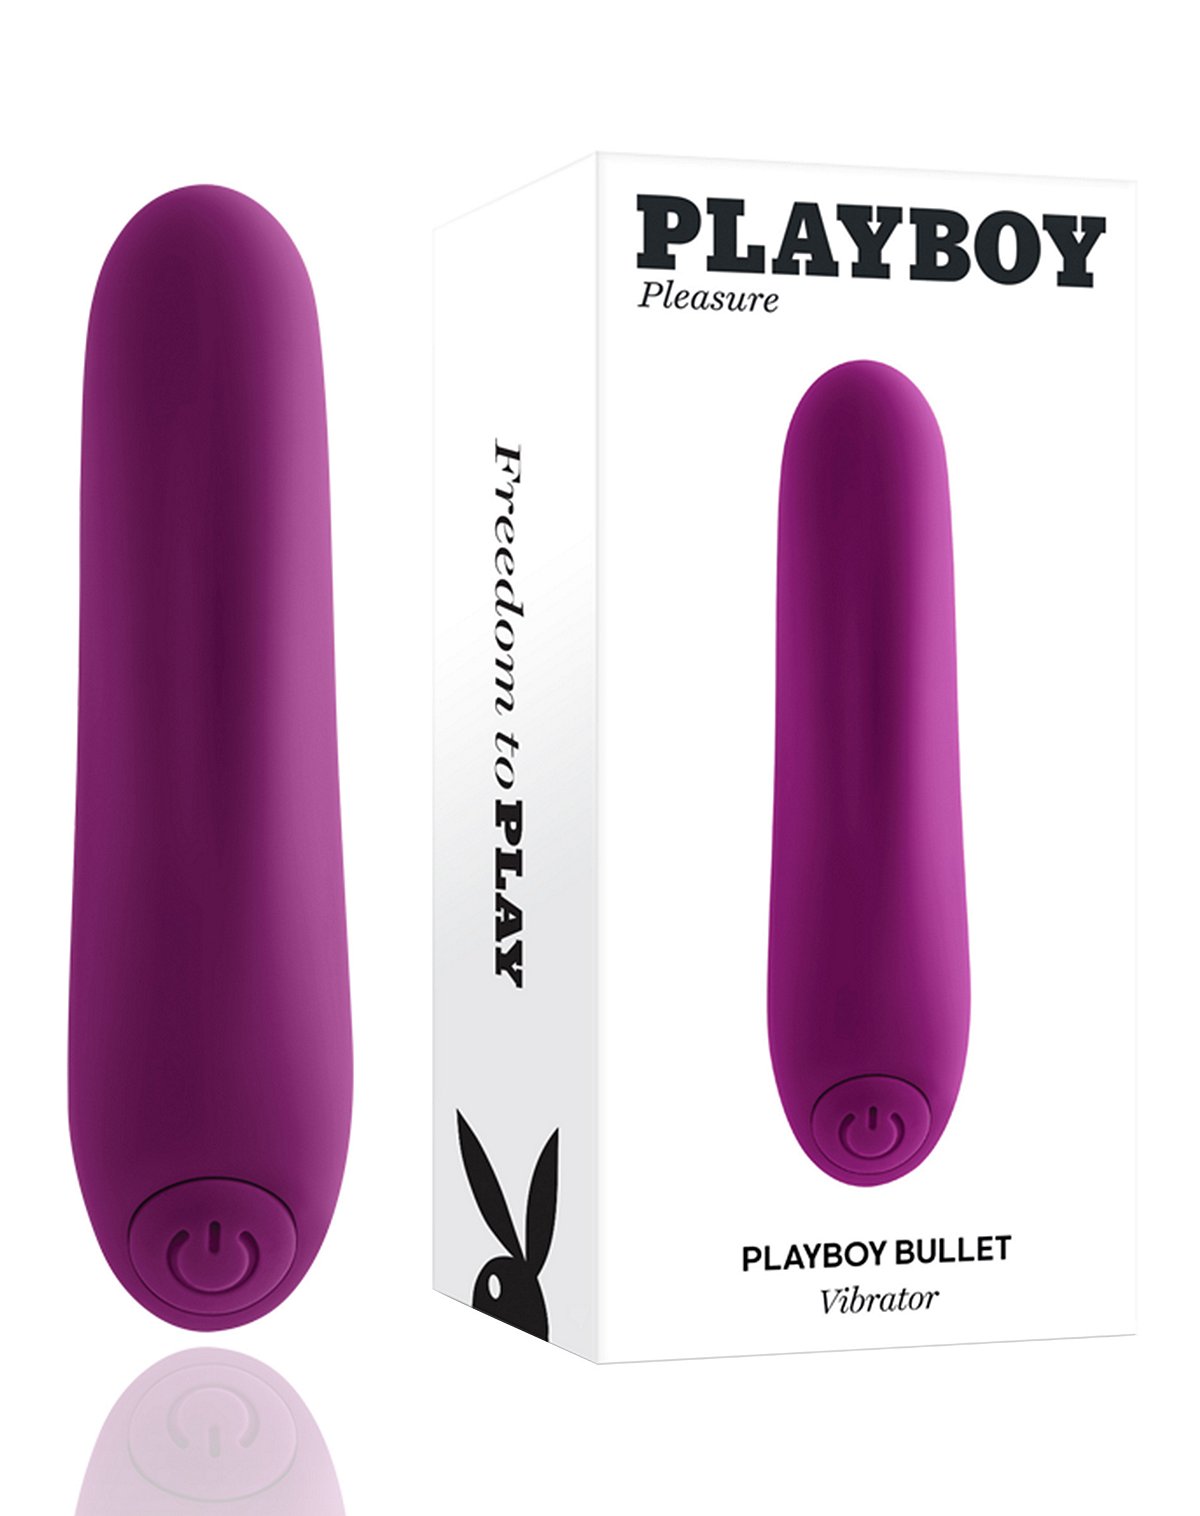 Playboy Pleasure 7-Function Rechargeable Bullet Vibrator